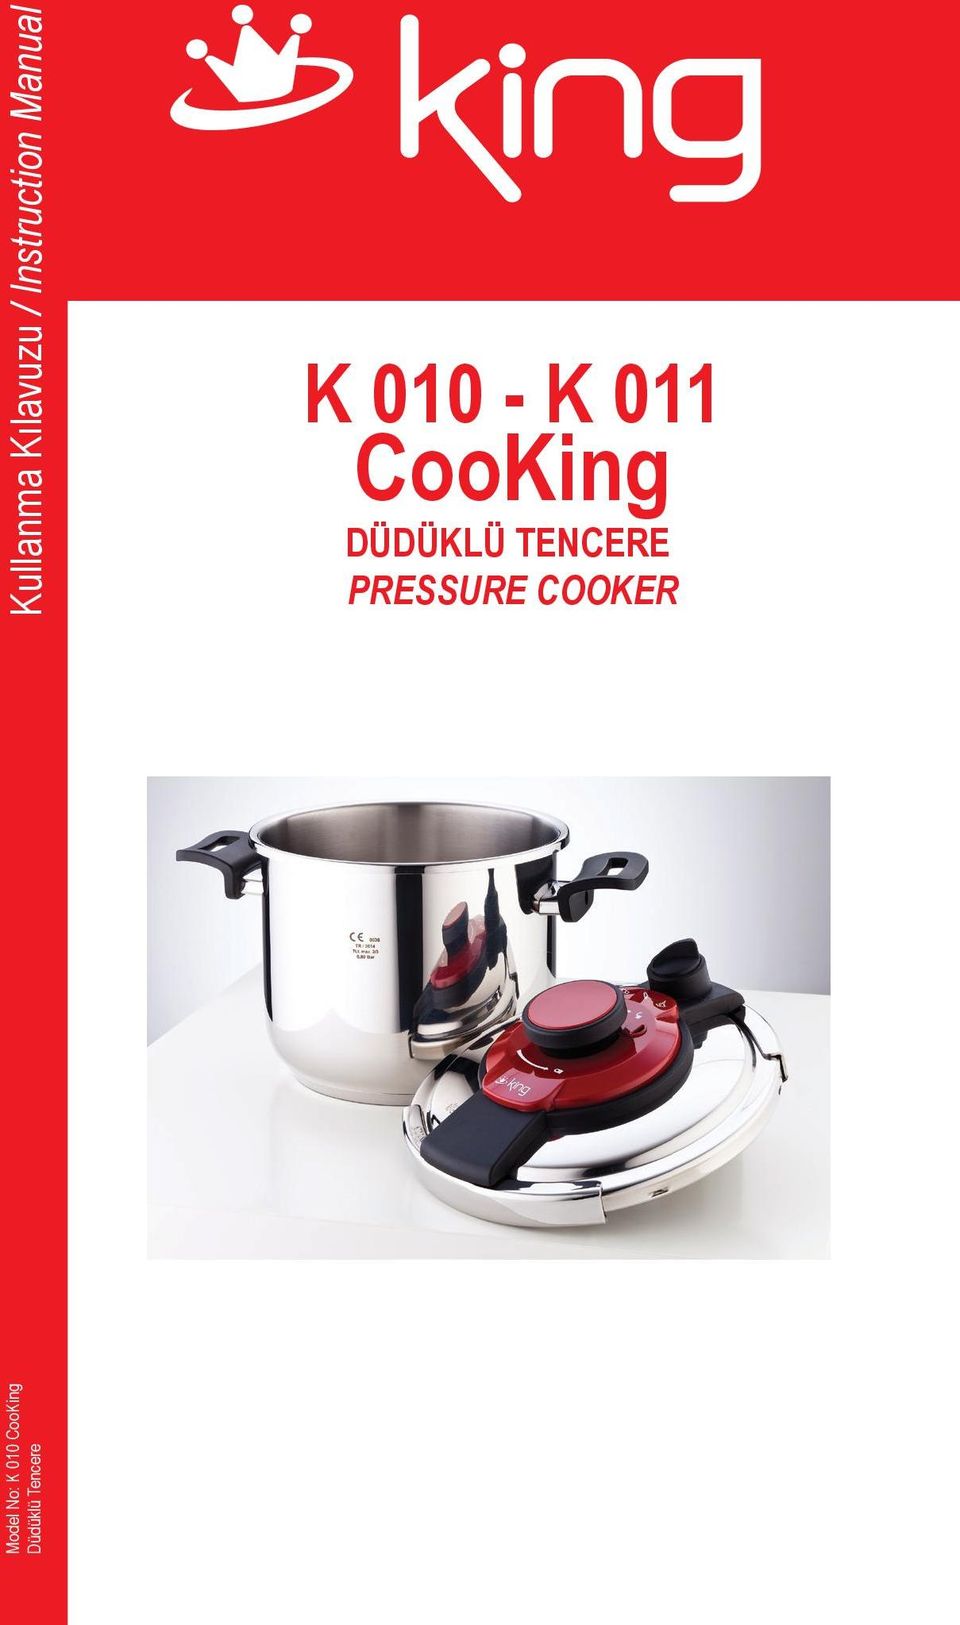 K K 011. CooKing DÜDÜKLÜ TENCERE PRESSURE COOKER. Düdüklü Tencere Kullanma  Kılavuzu / Instruction Manual. Model No: K 010 CooKing - PDF Free Download